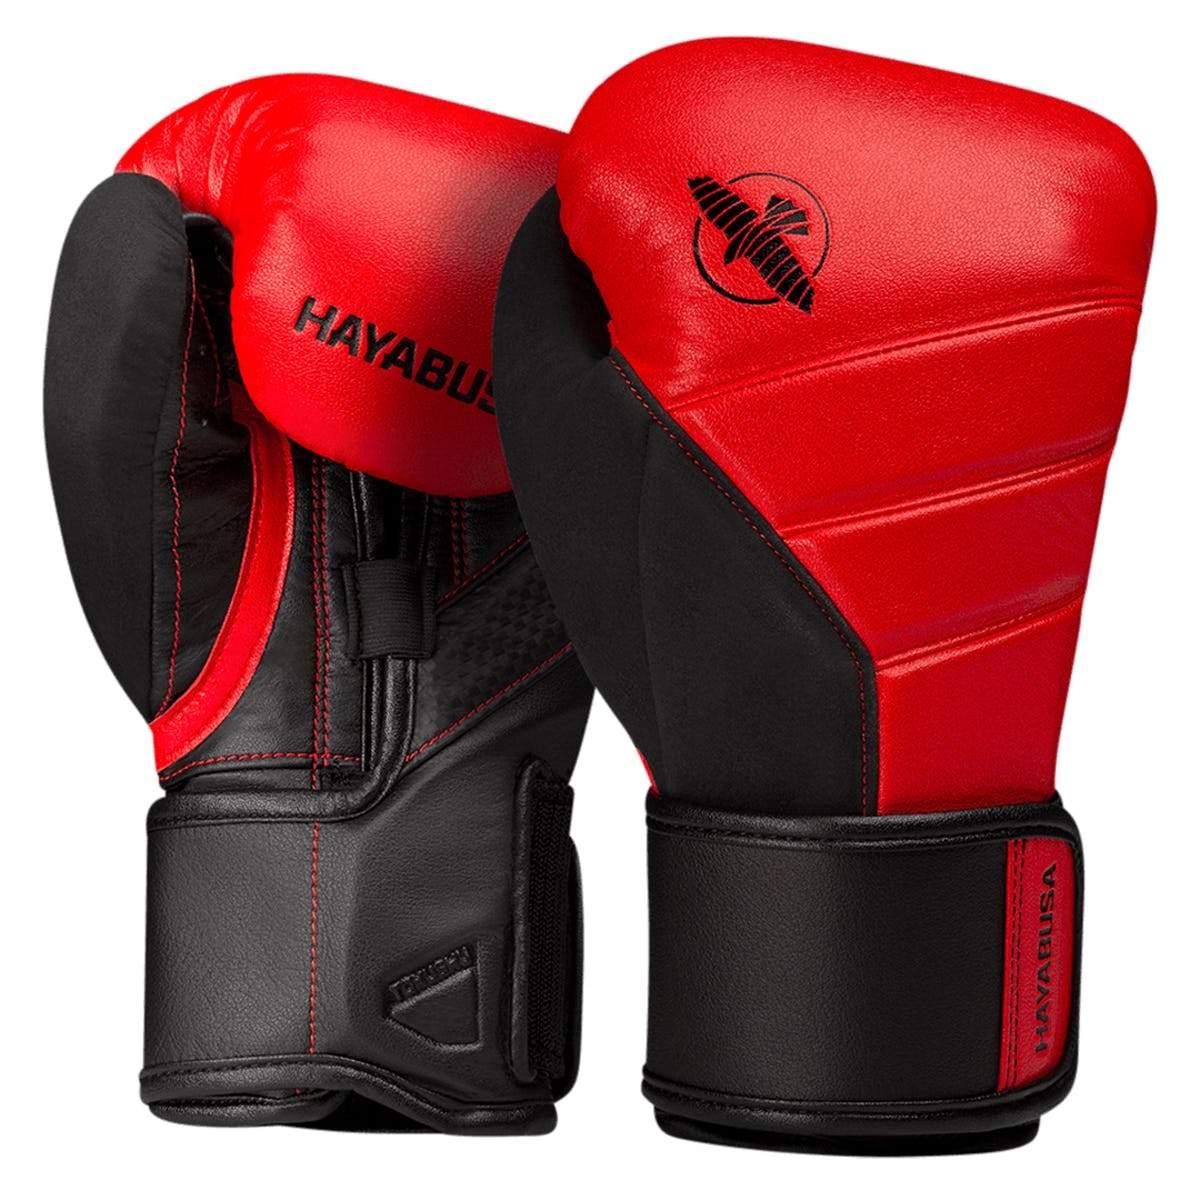 Hayabusa - Hayabusa T3 Boxing Gloves - Mortal Combat Fight Shop